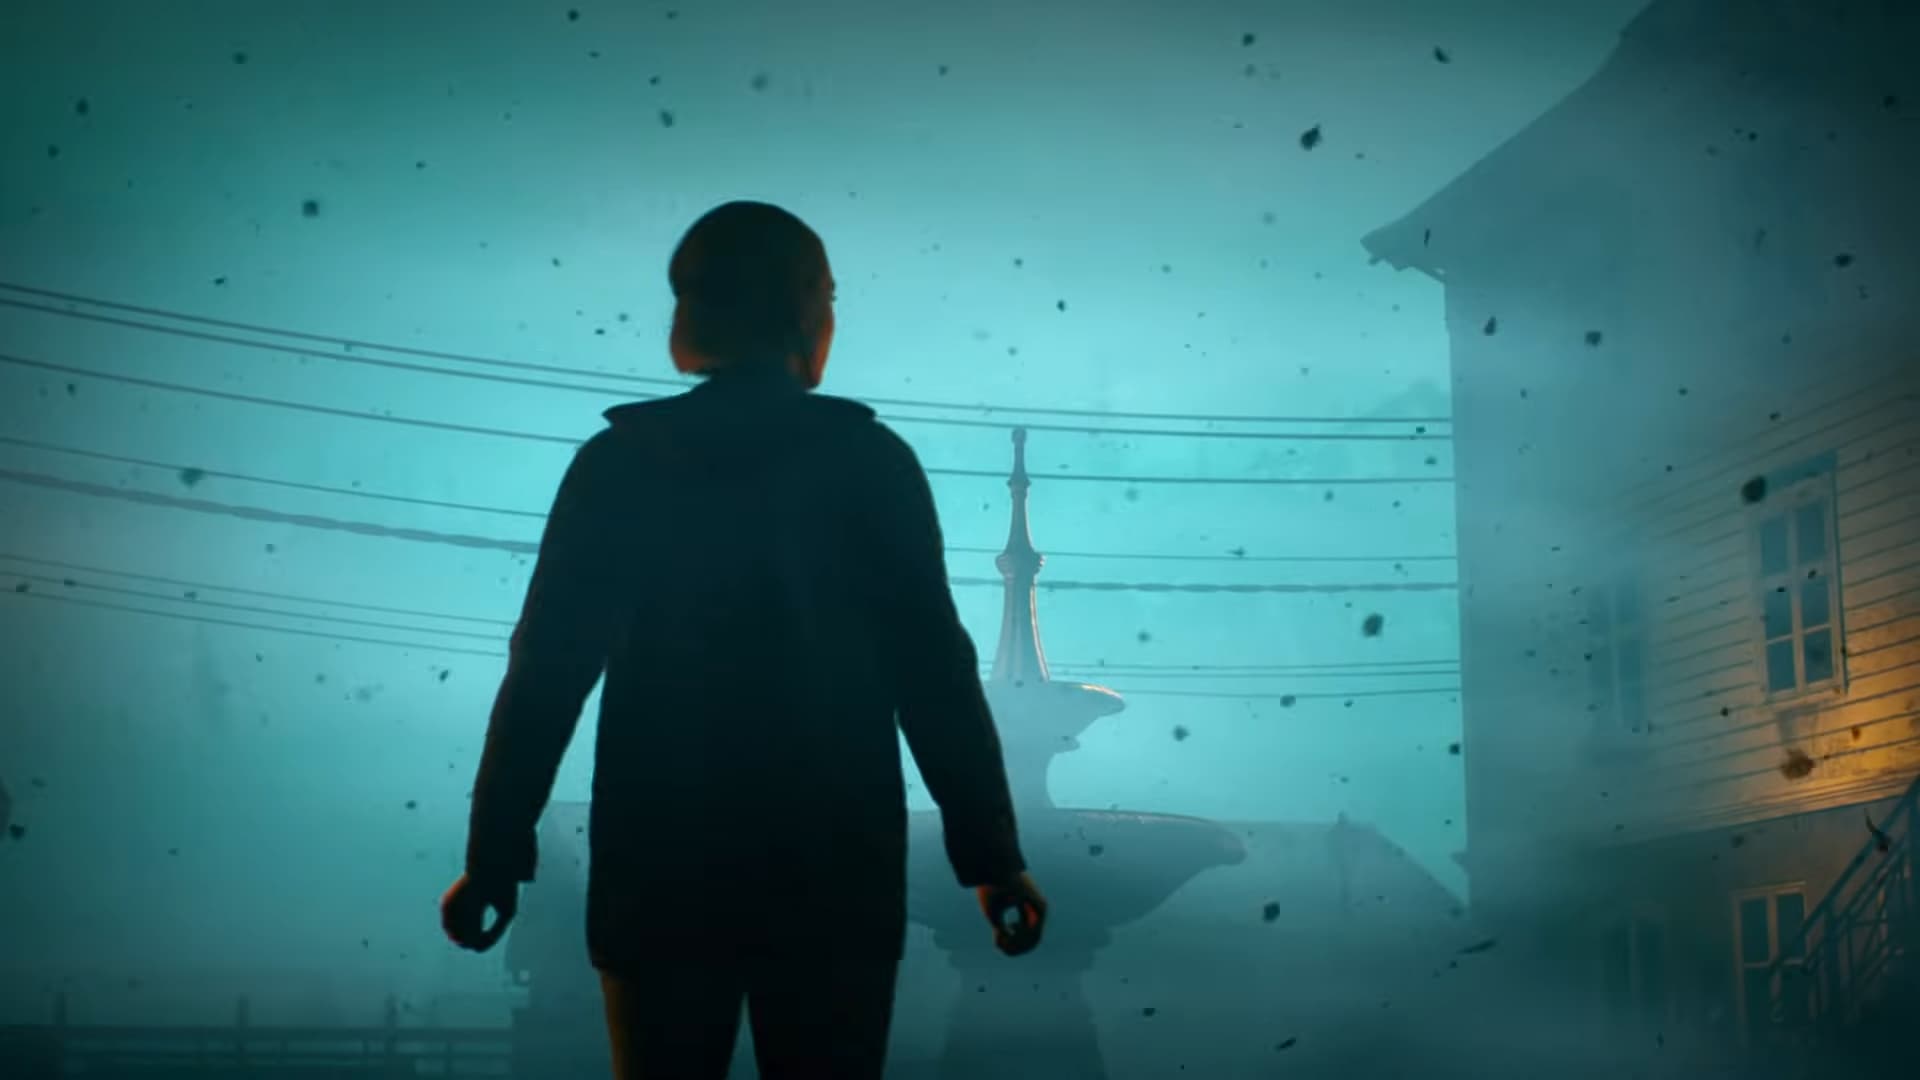 Série interativa Silent Hill: Ascension vai ao ar a partir de 31